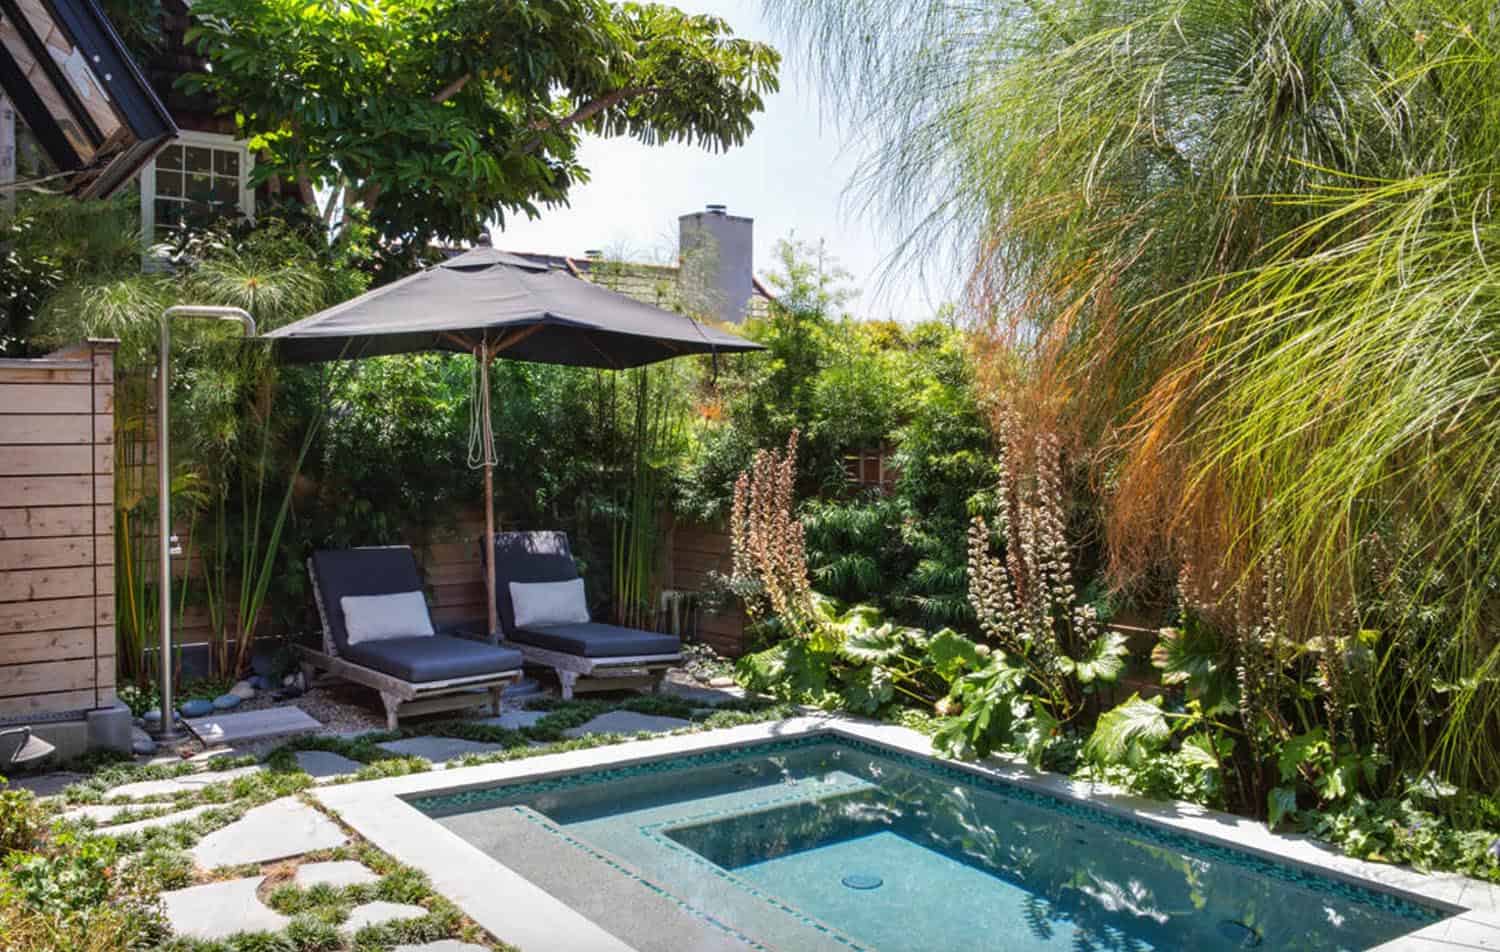 18 Extraordinary Small Pool Design Ideas For A Backyard Oasis